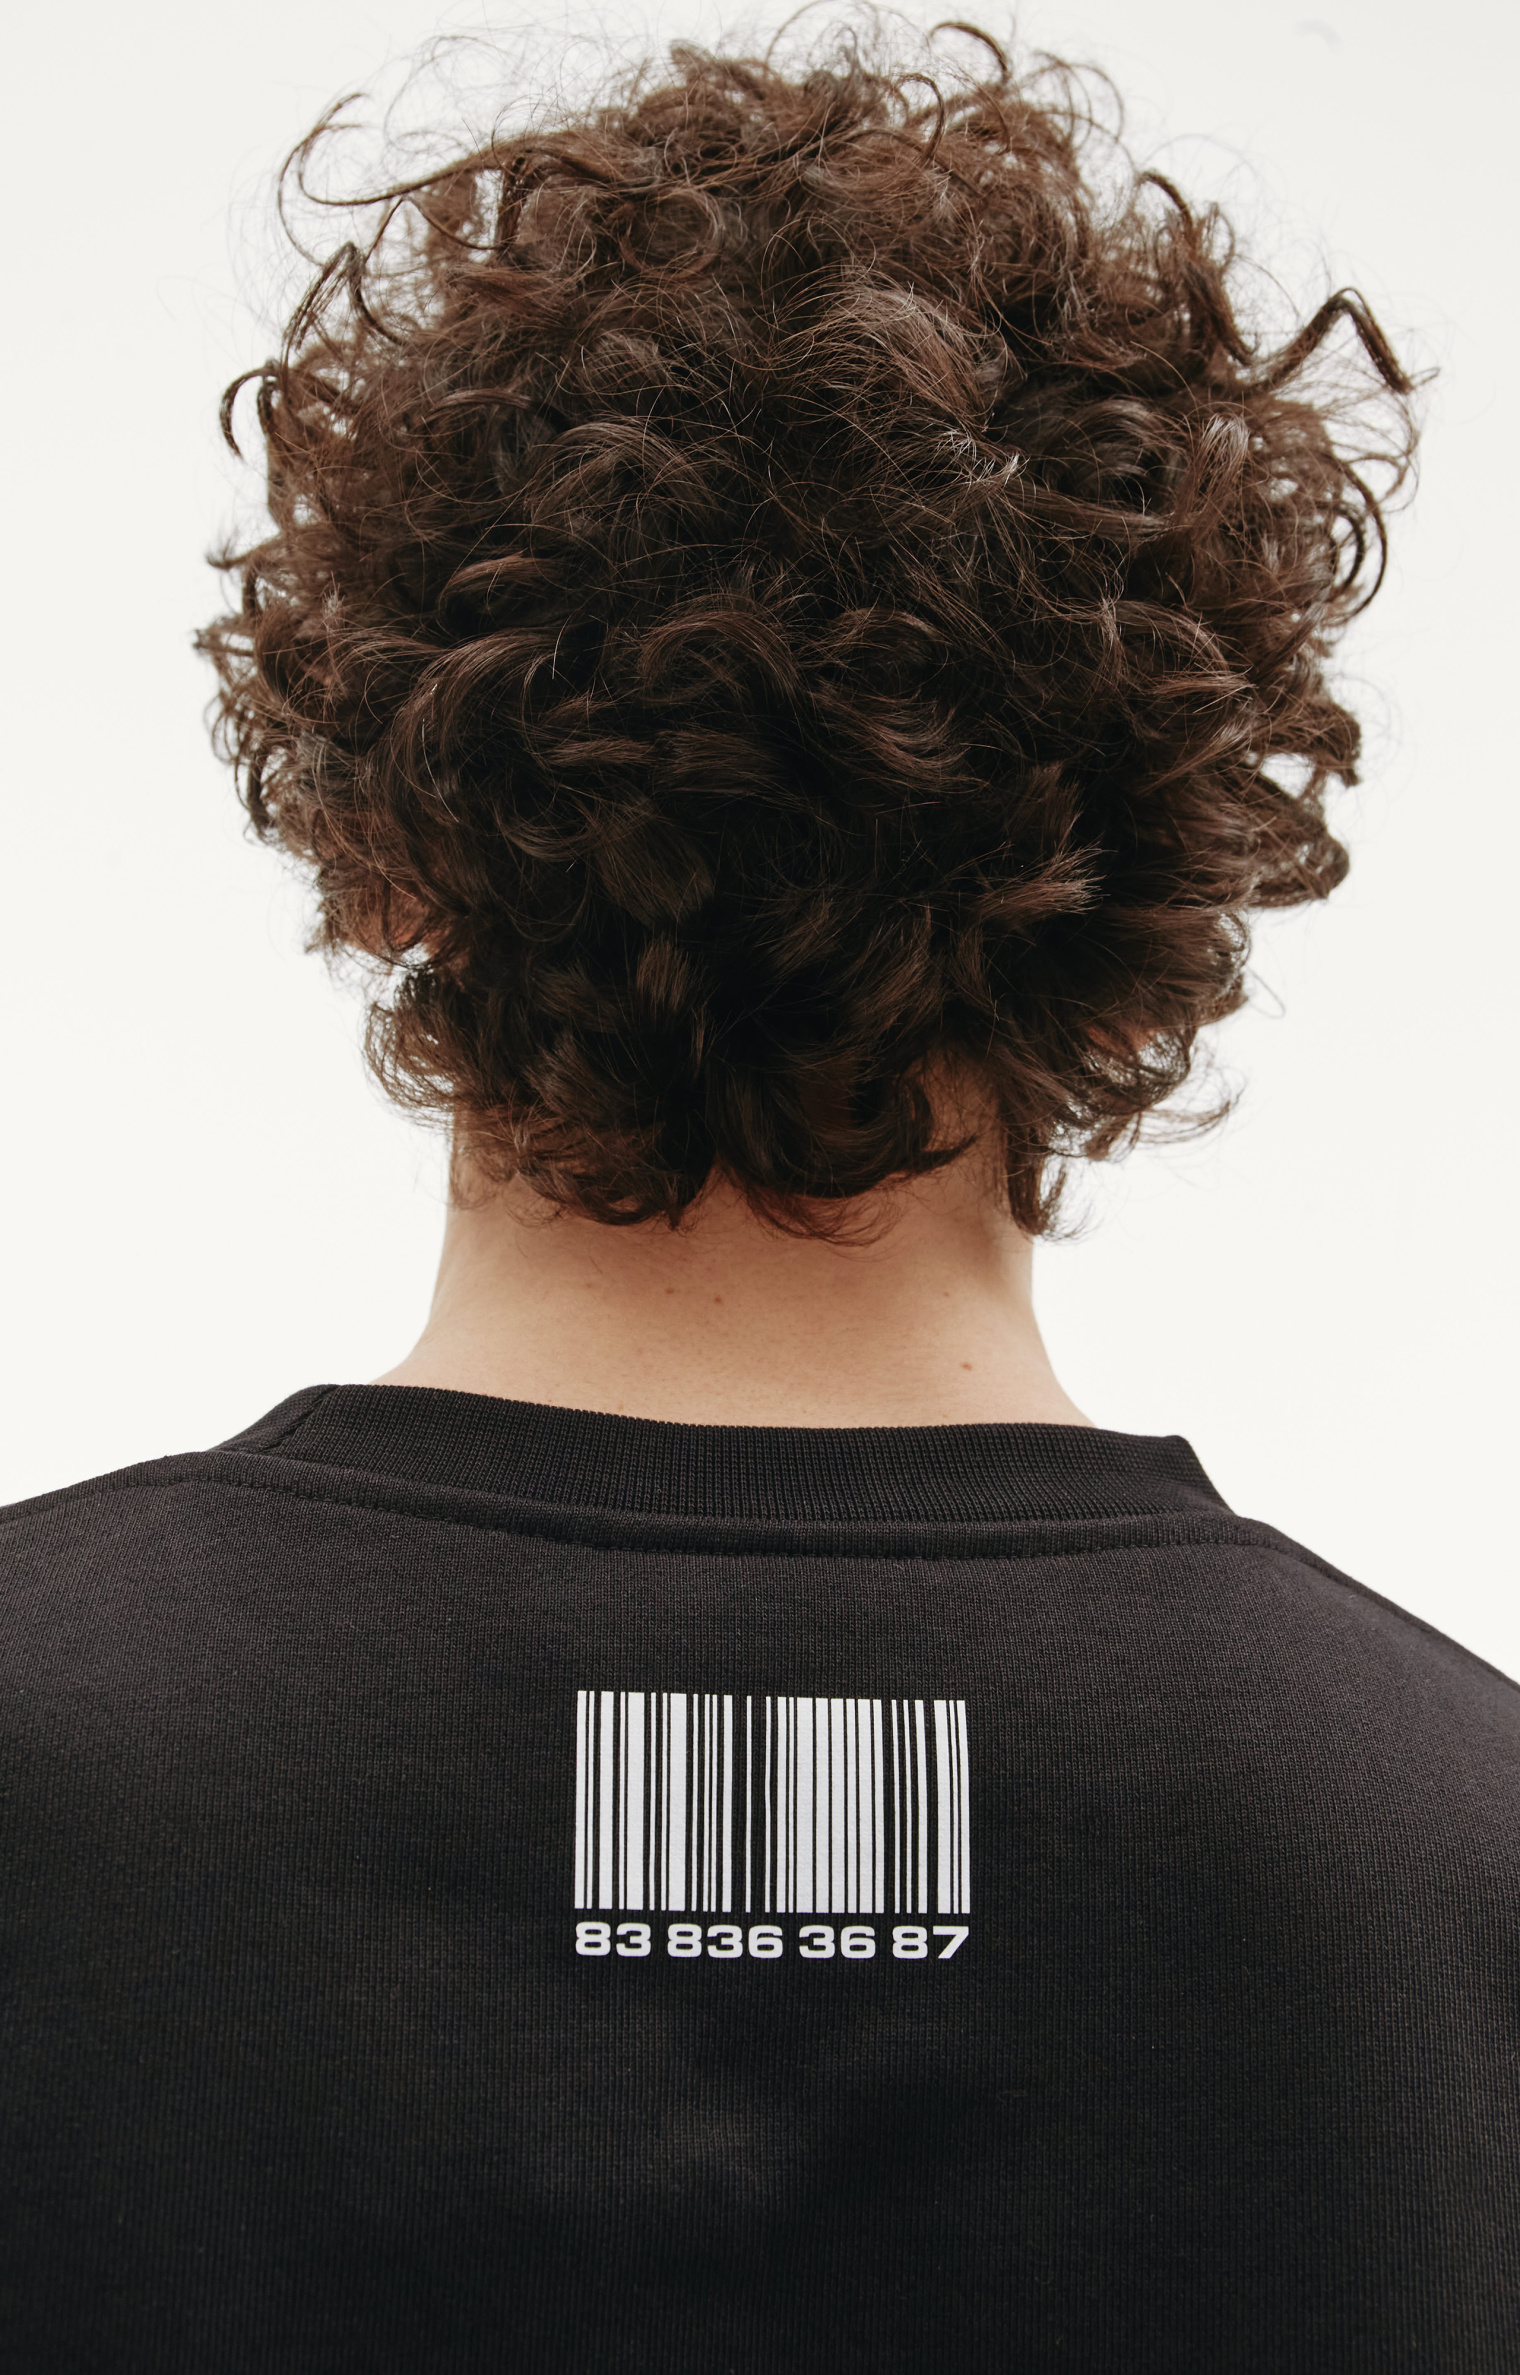 VTMNTS Barcode printed sweatshirt